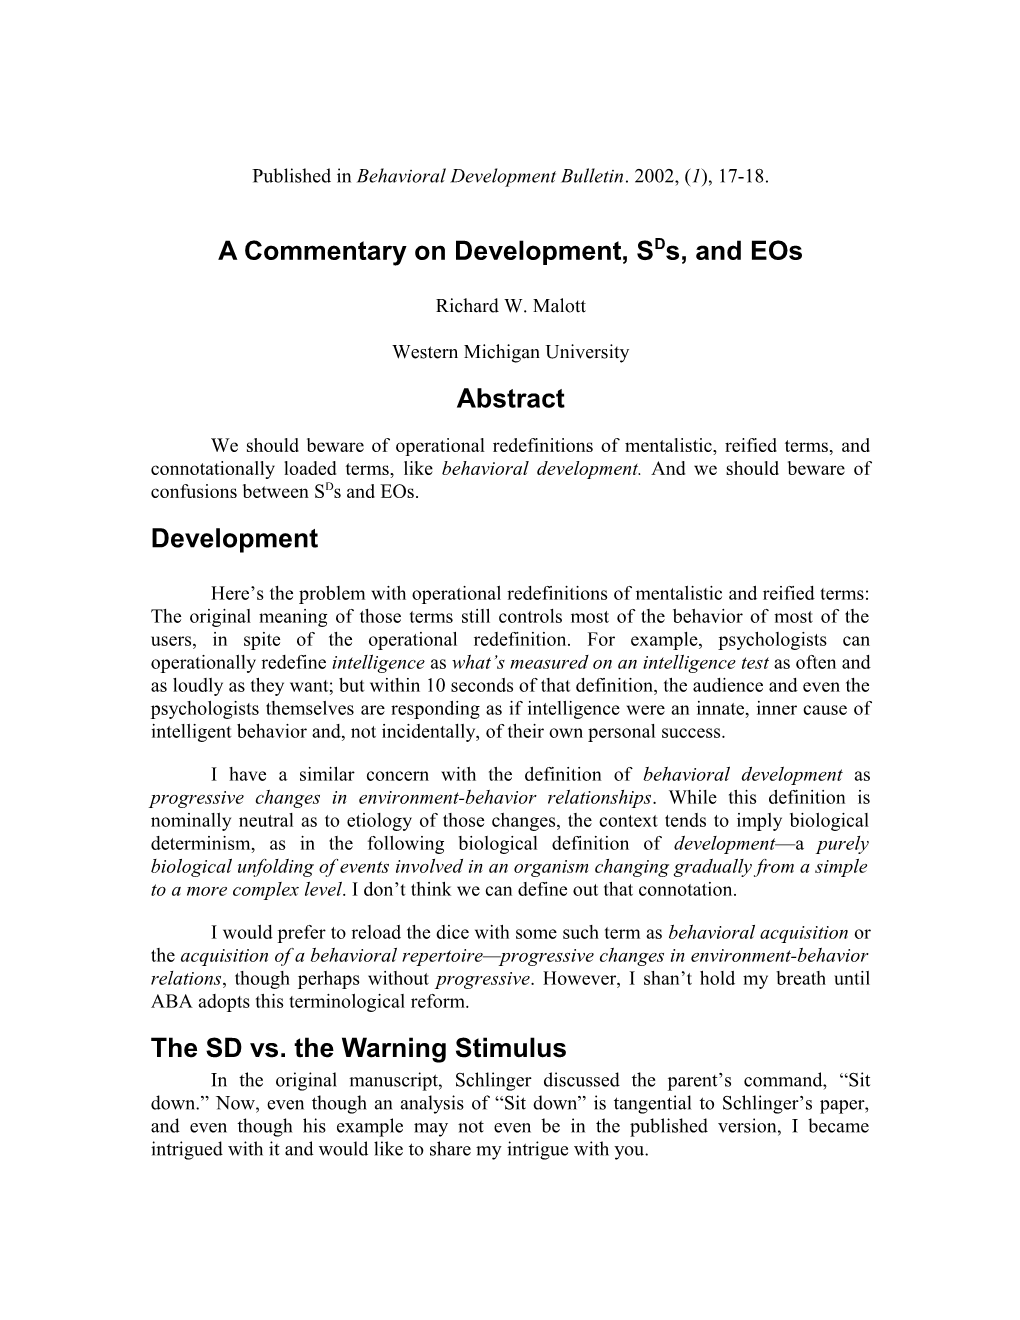 Development, Sds and Eos